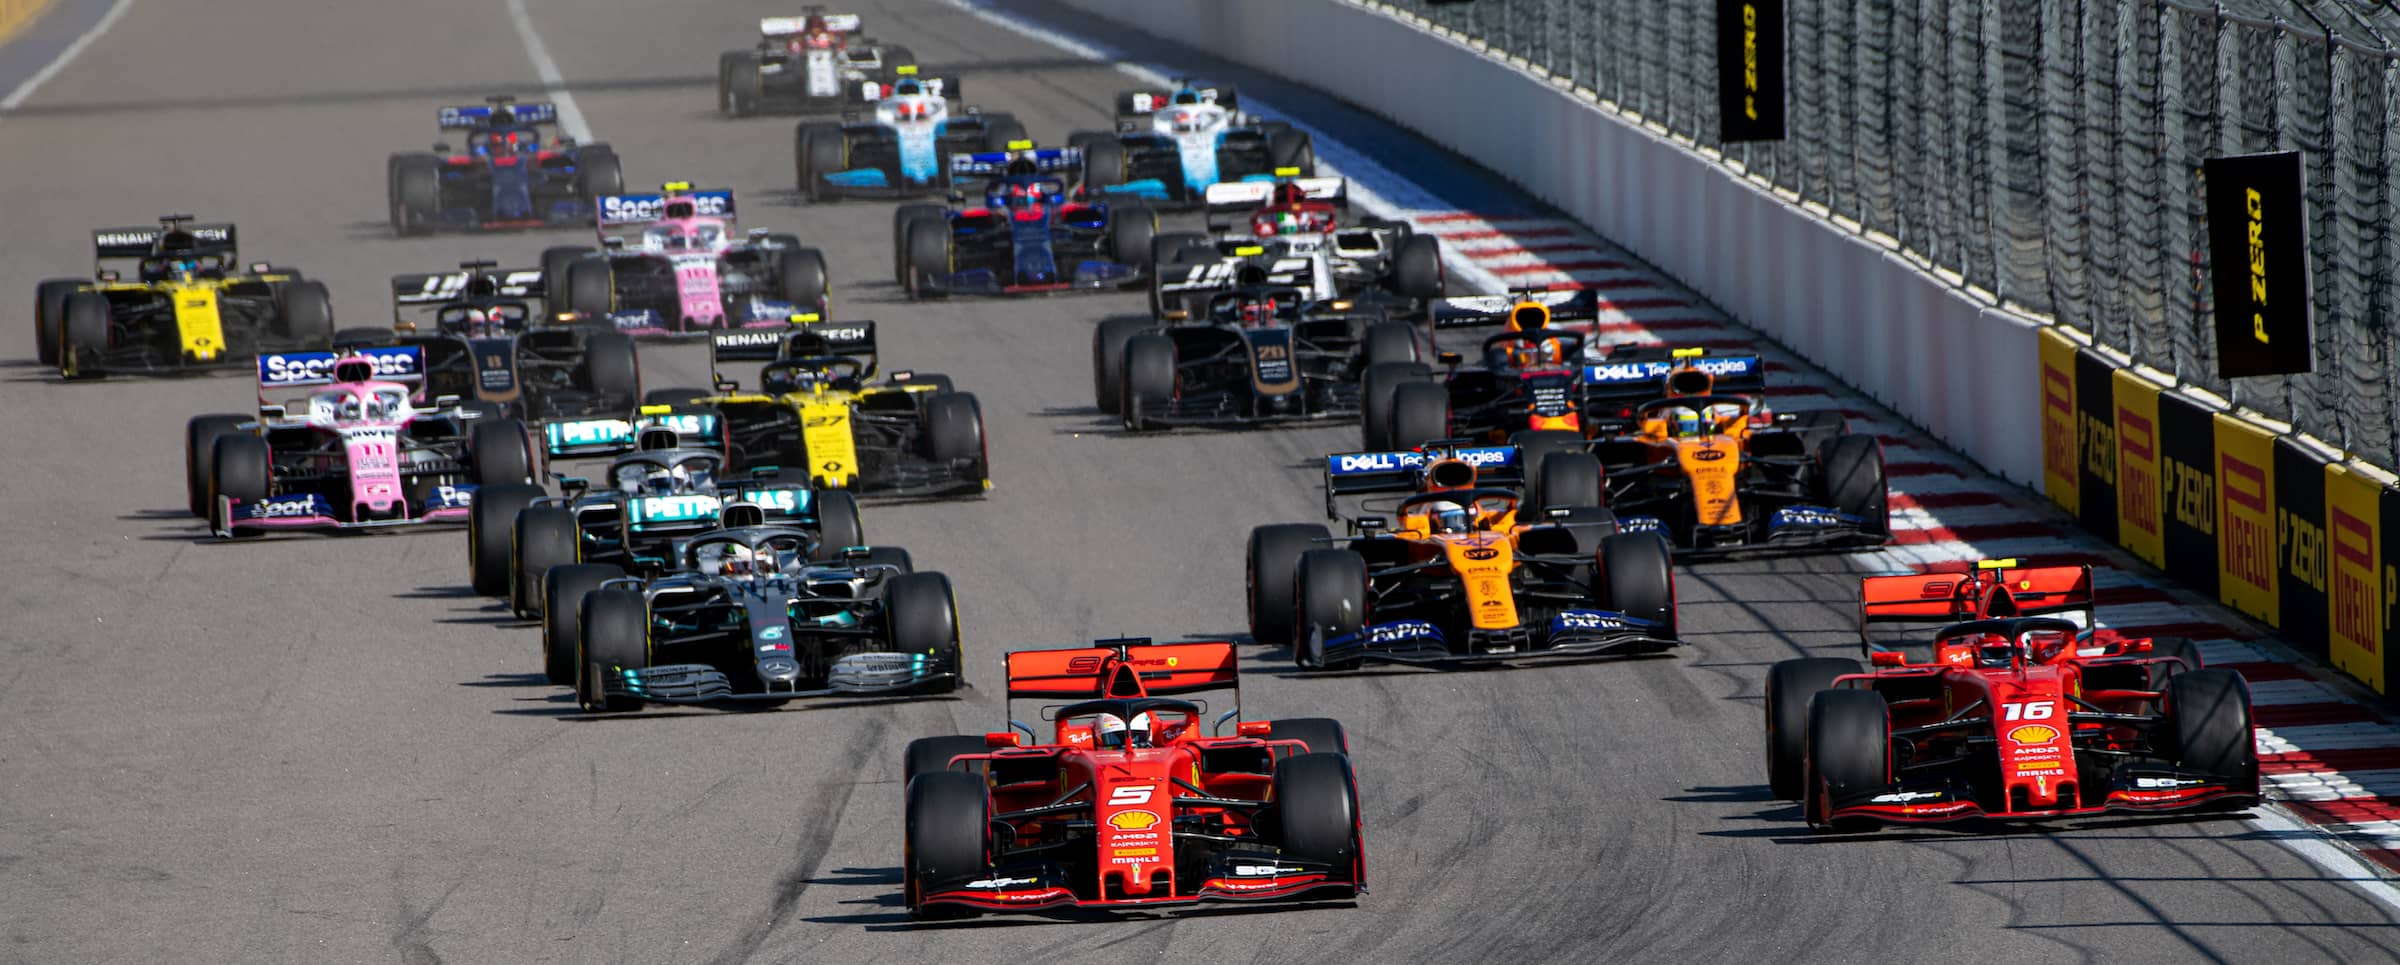 Race Start at Formula 1 Grand Prix of Russia 2019